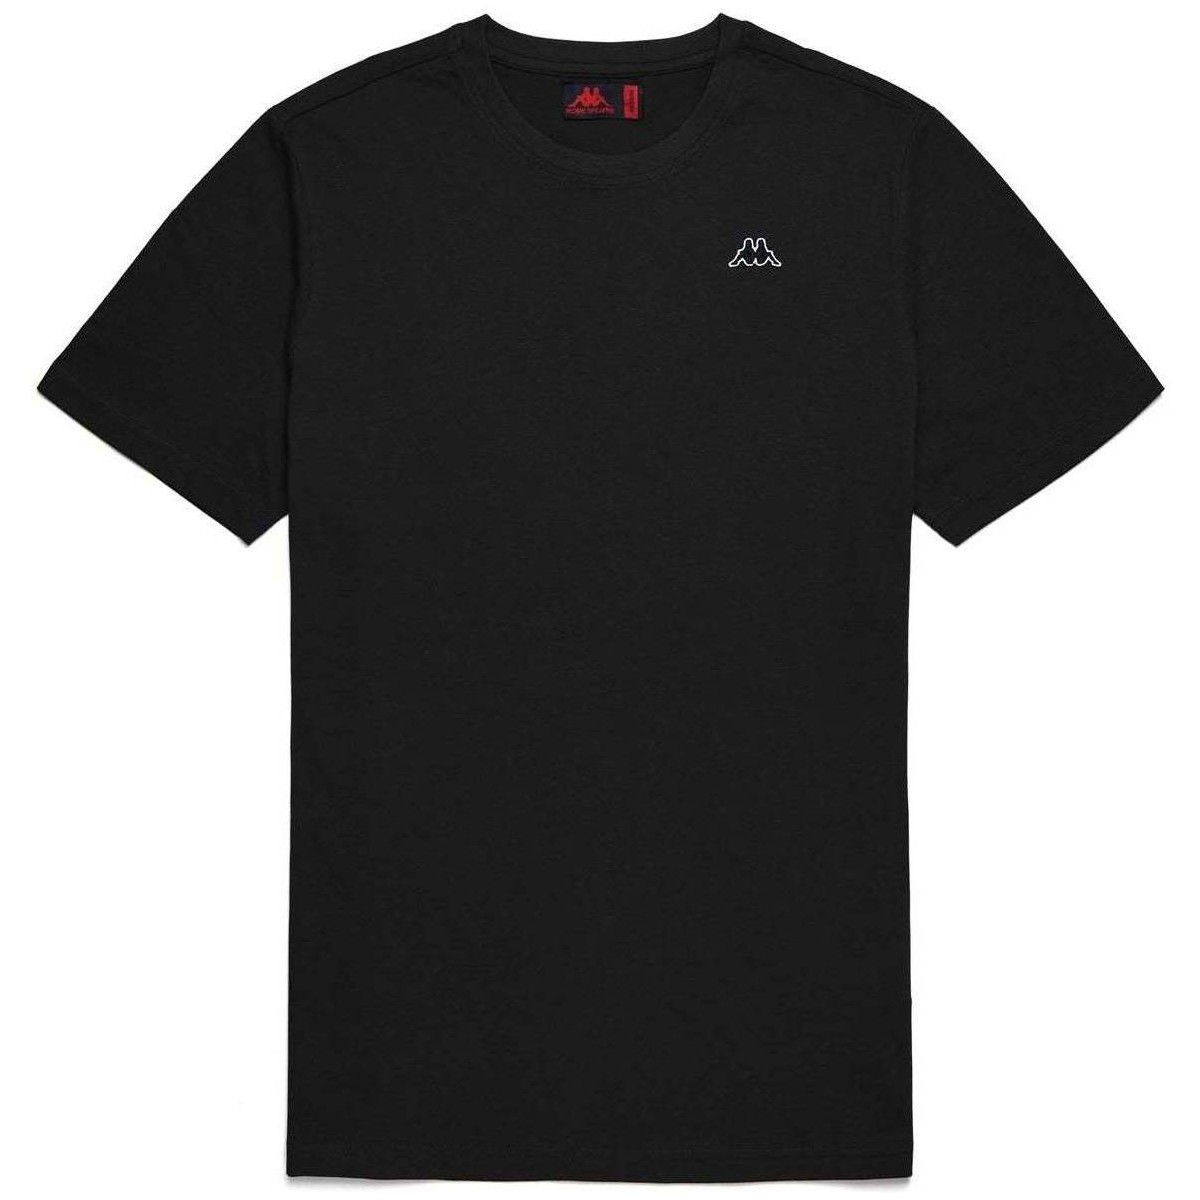 Vêtements Homme T-shirts manches courtes Kappa T-shirt Luc Robe di Noir